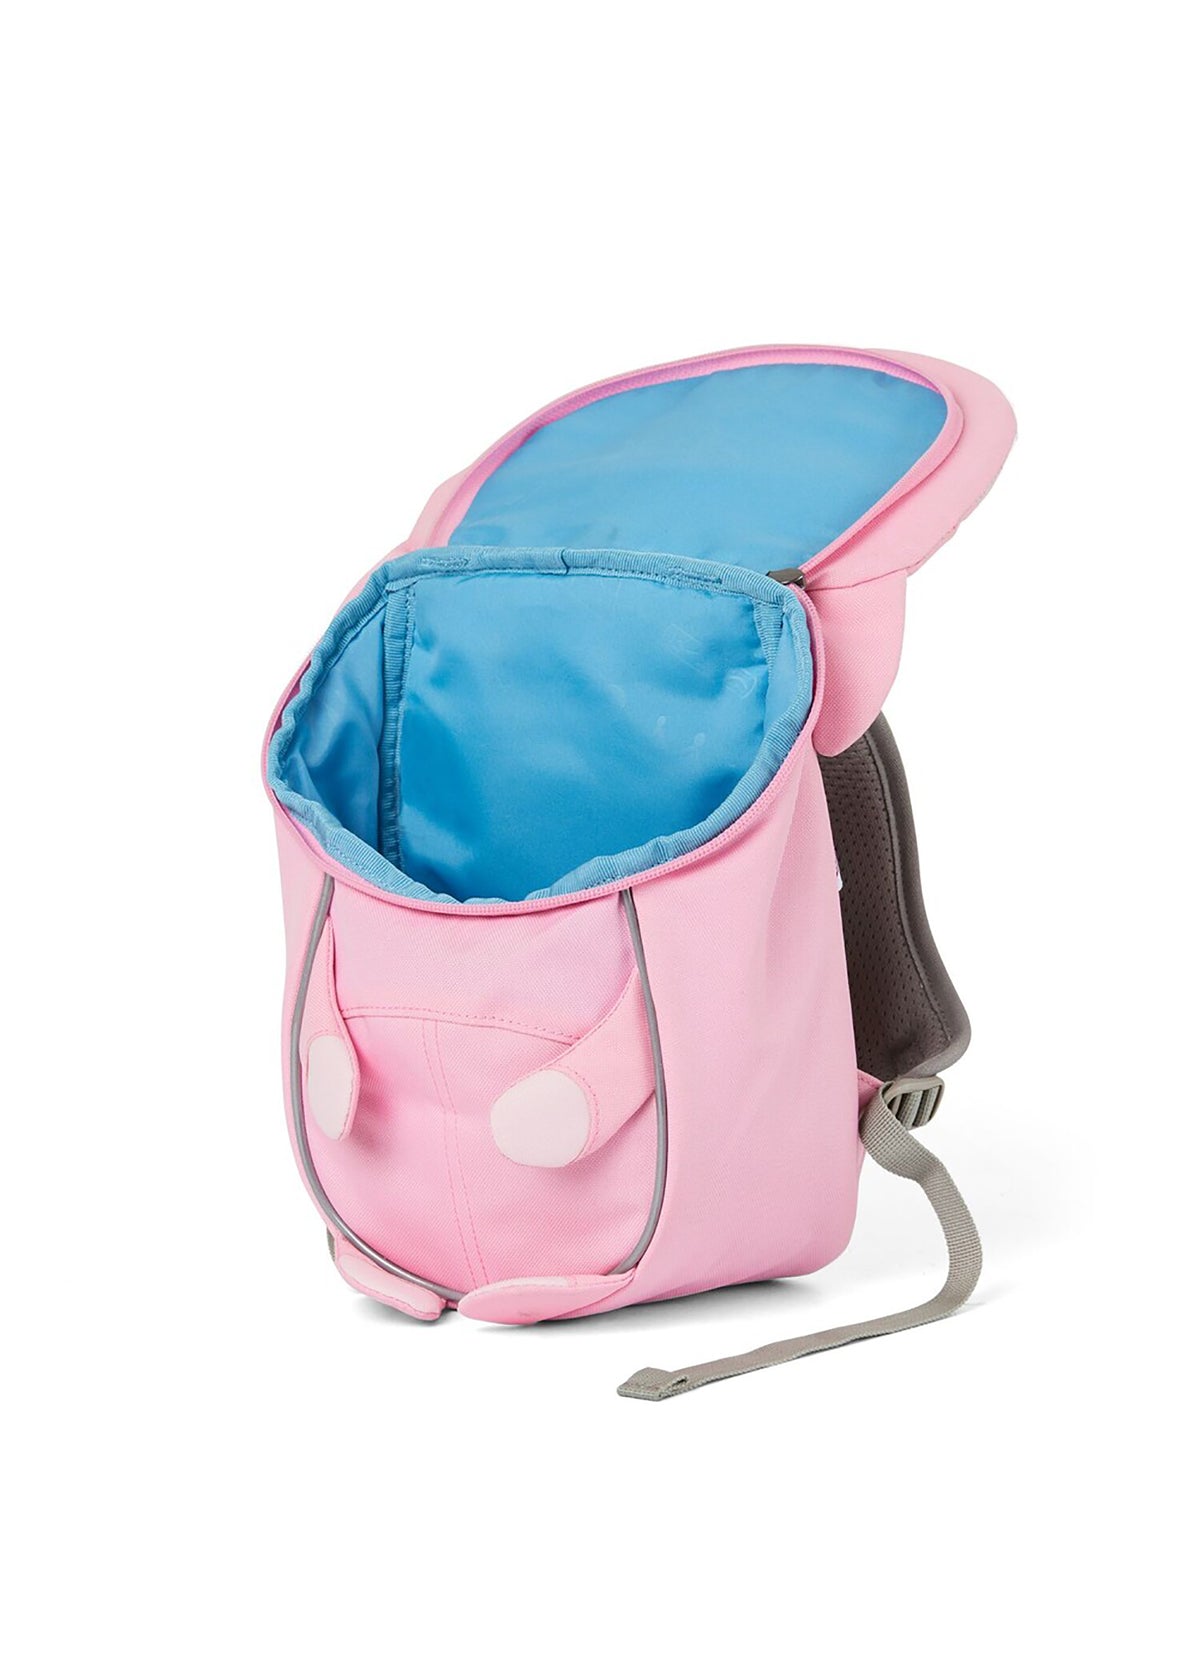 Children's backpack, small - Unicorn